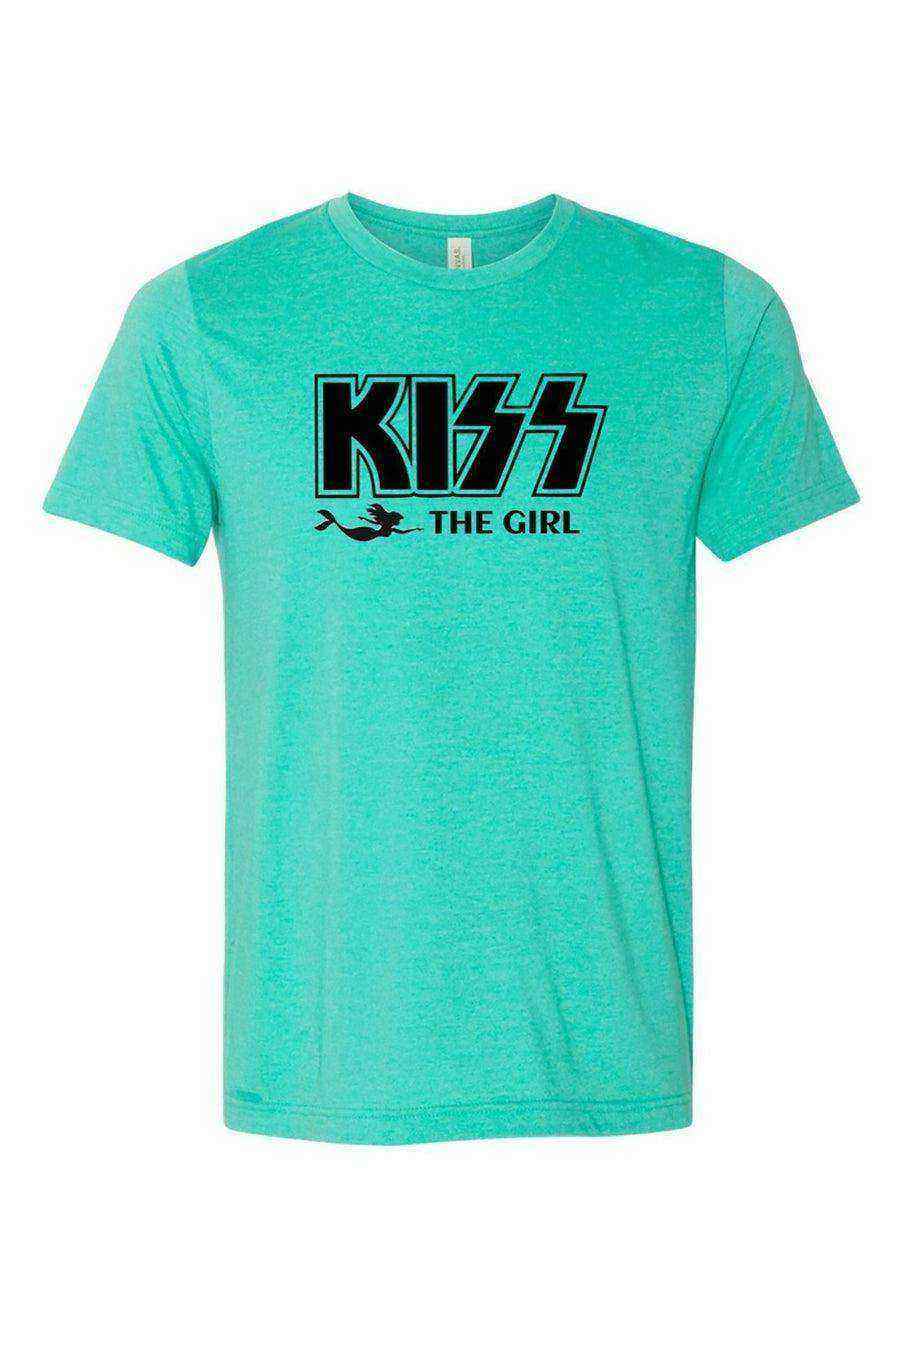 Toddler | Kiss The Girl Shirt | Little Mermaid Shirt | Kiss Shirt - Dylan's Tees